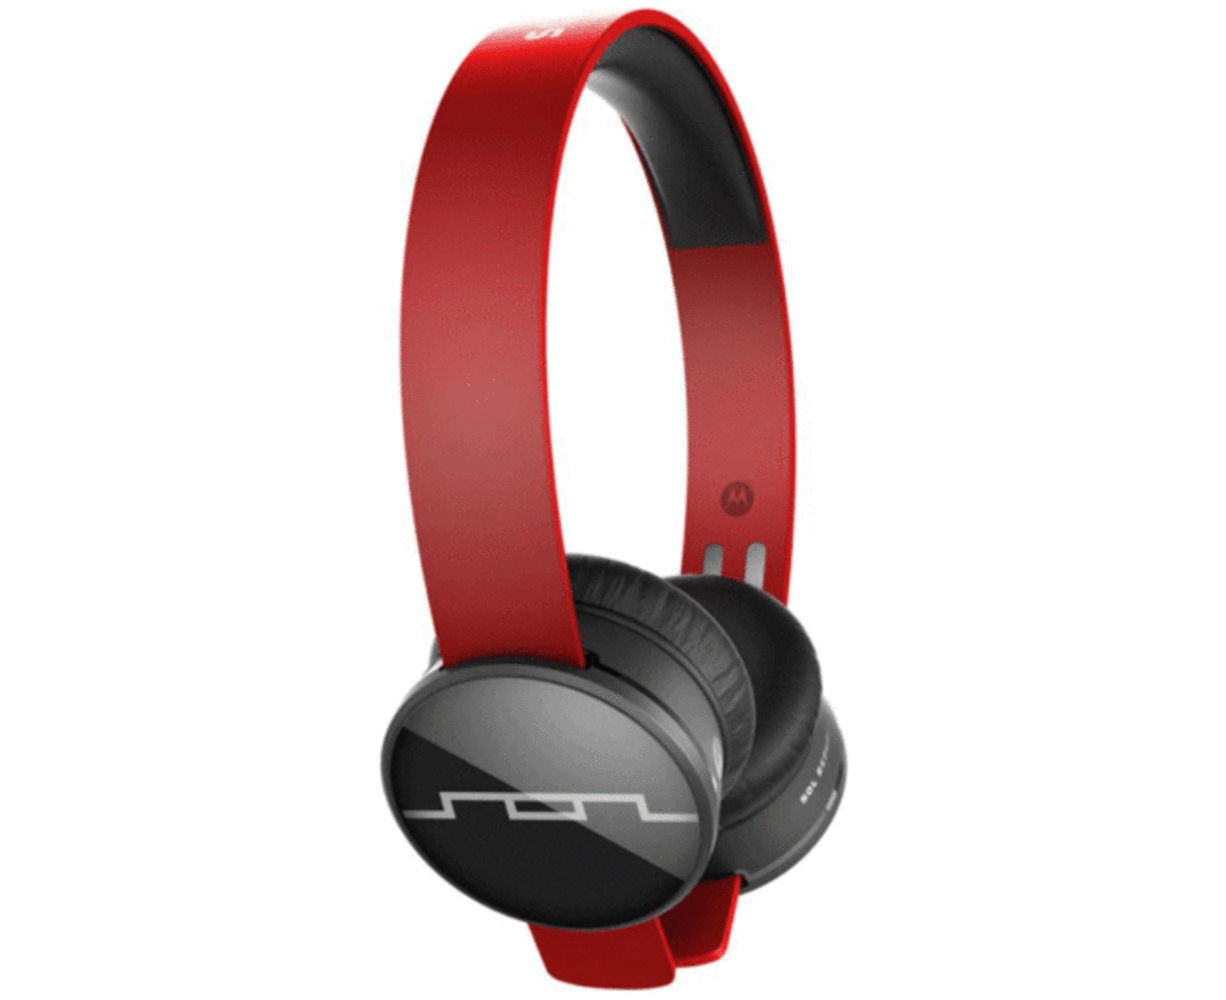 Sol Republic Tracks Air Wireless NFC Bluetooth Headphones Headset w/Mic - Red 3